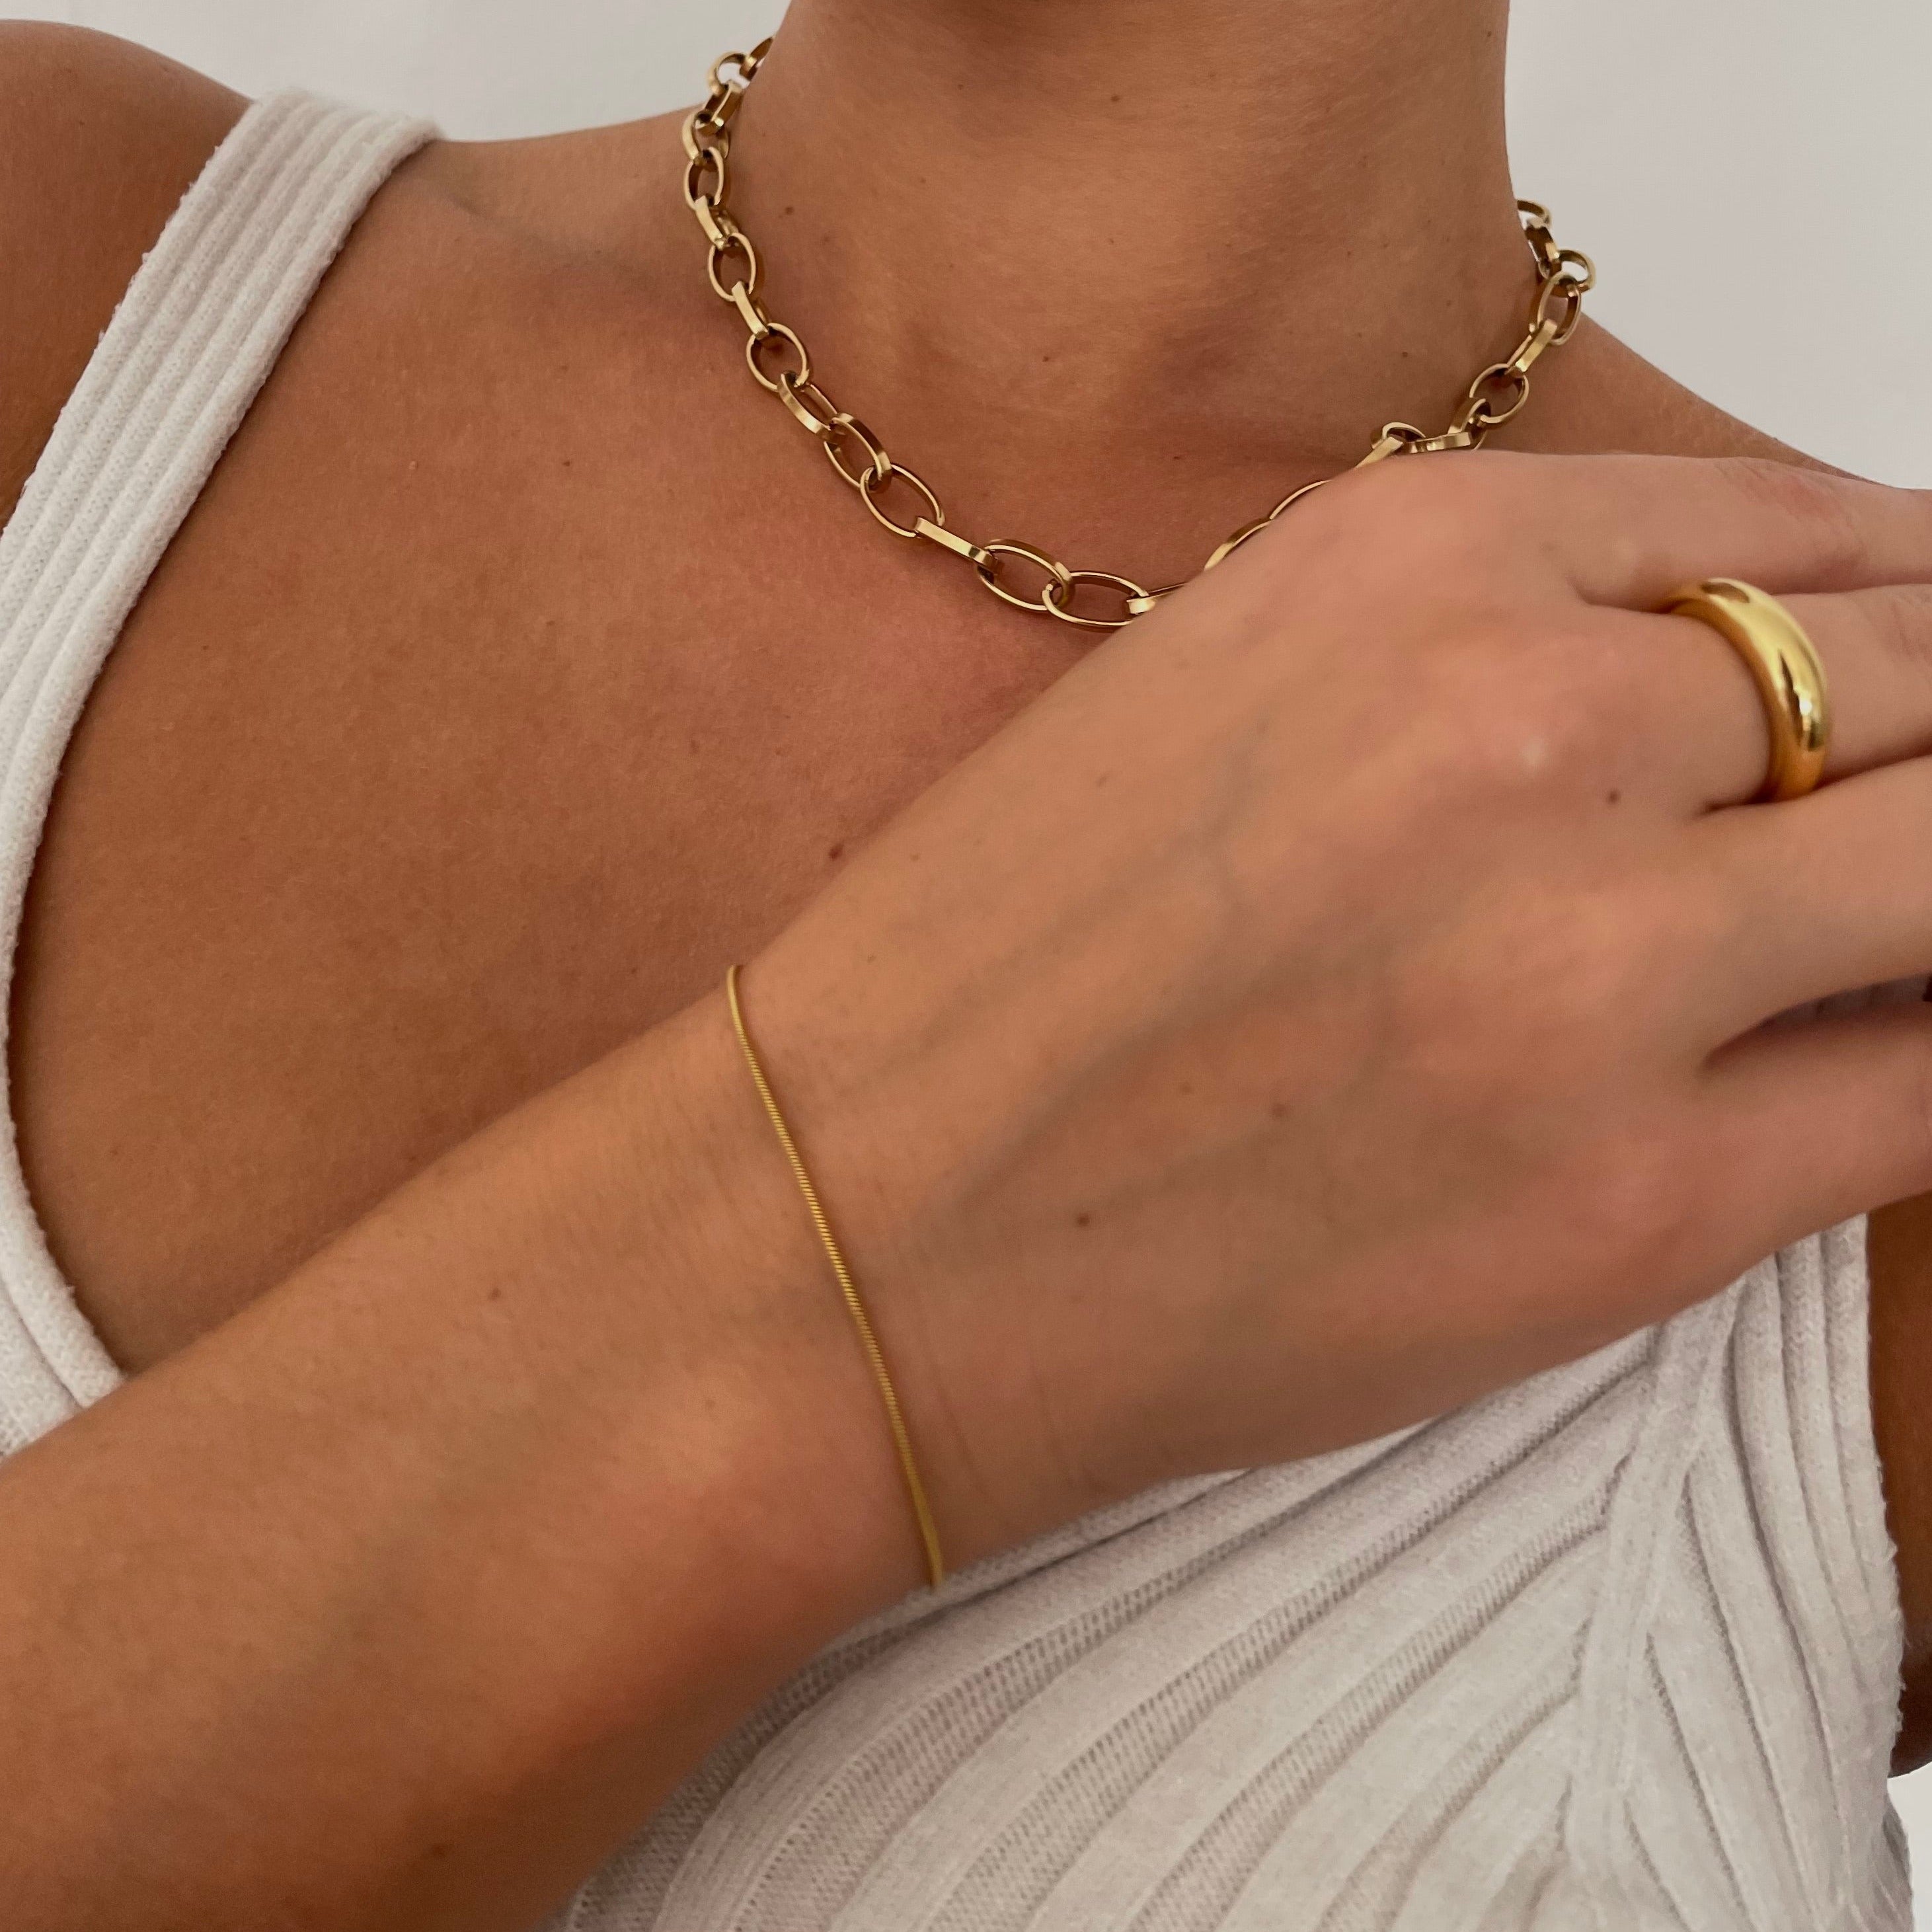 Buy Dainty Gold Bracelet / Gold Chain Bracelet / Gold Bracelet / Delicate  Bracelet / Bridesmaid Bracelet / Thin Gold Bracelet / Gifts for Her Online  in India - Etsy